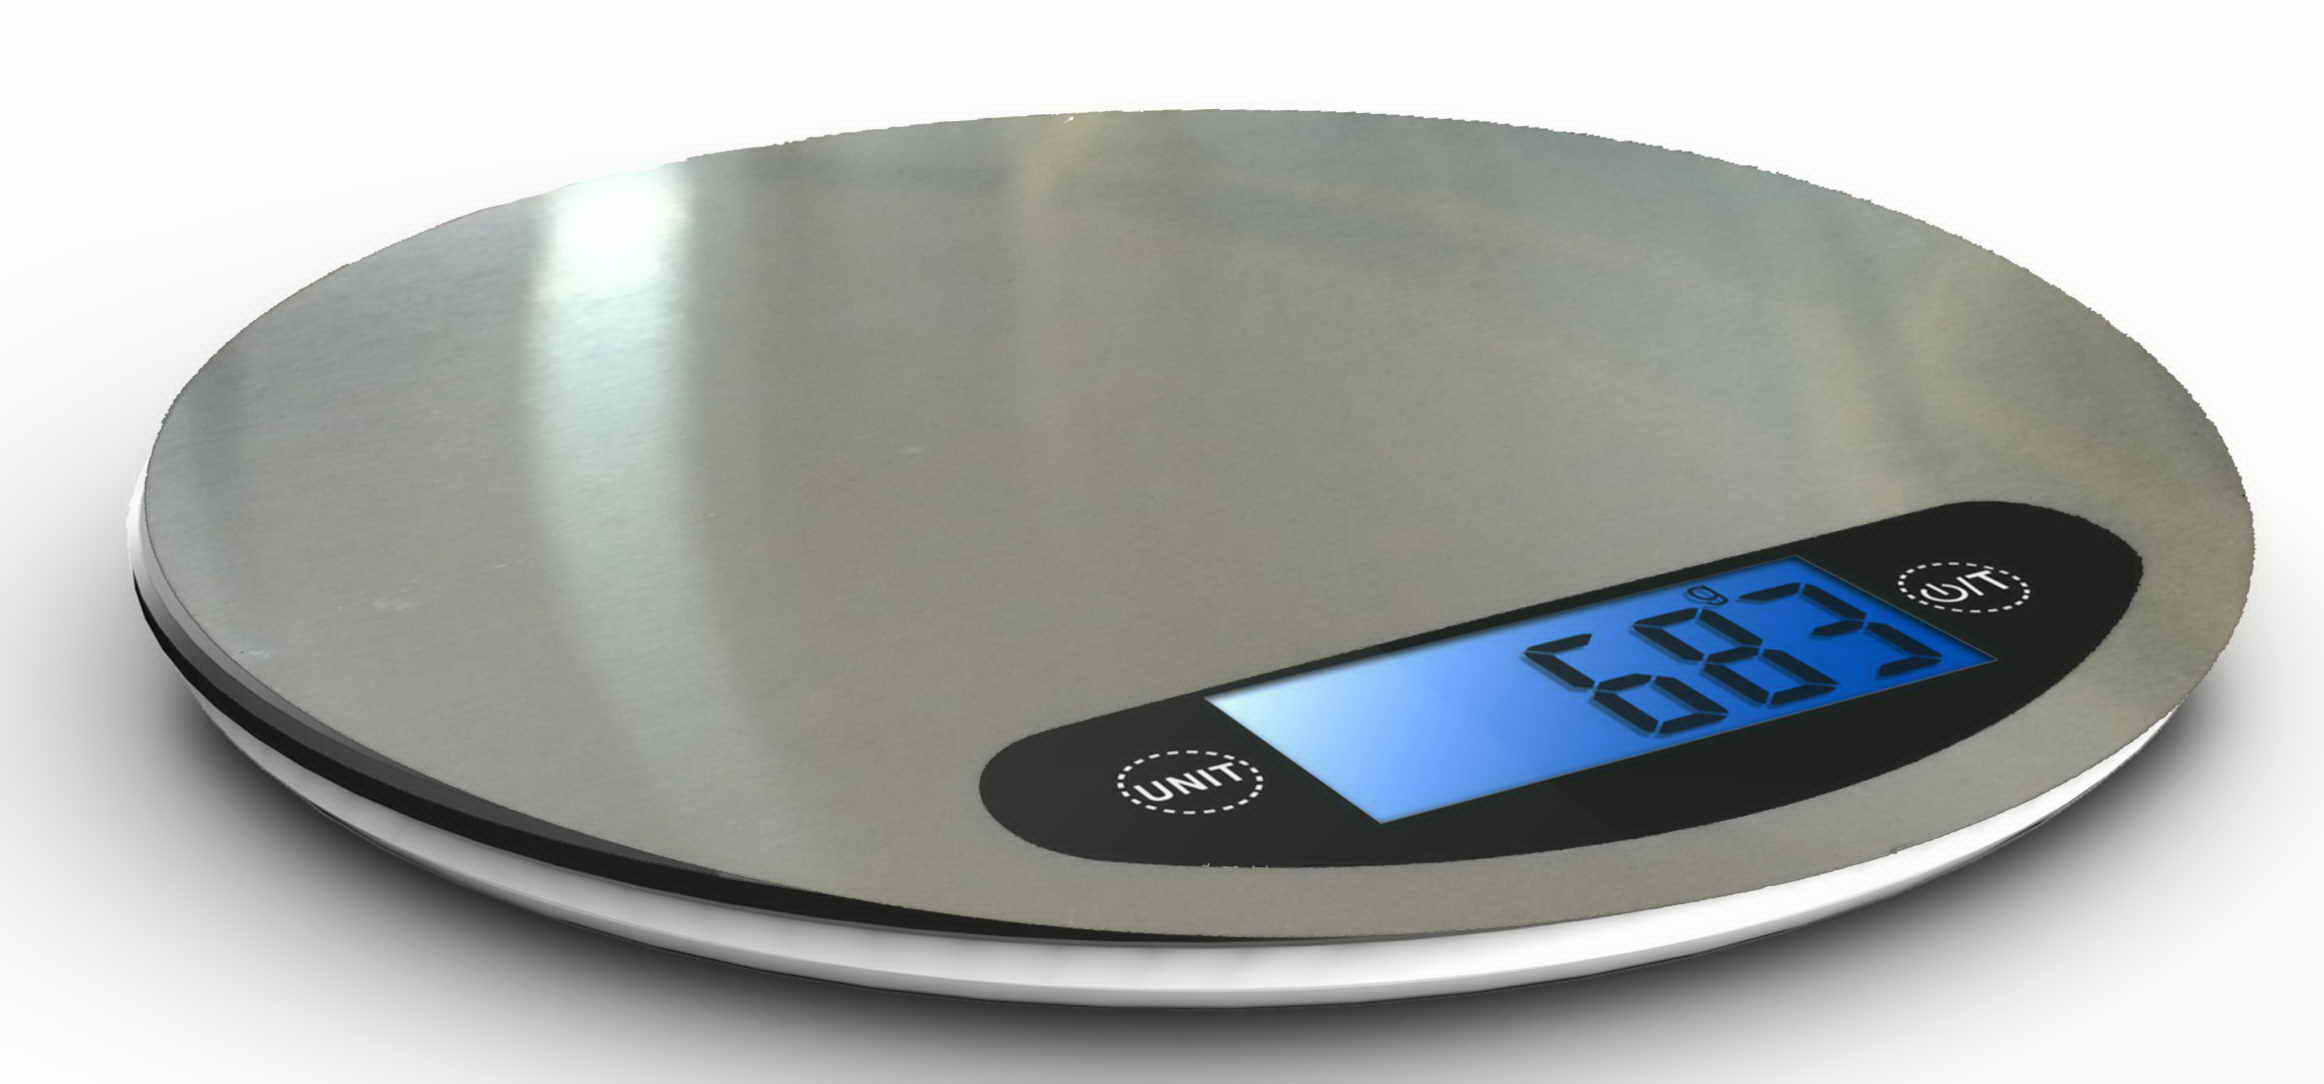 Round stainless steel kitchen scale